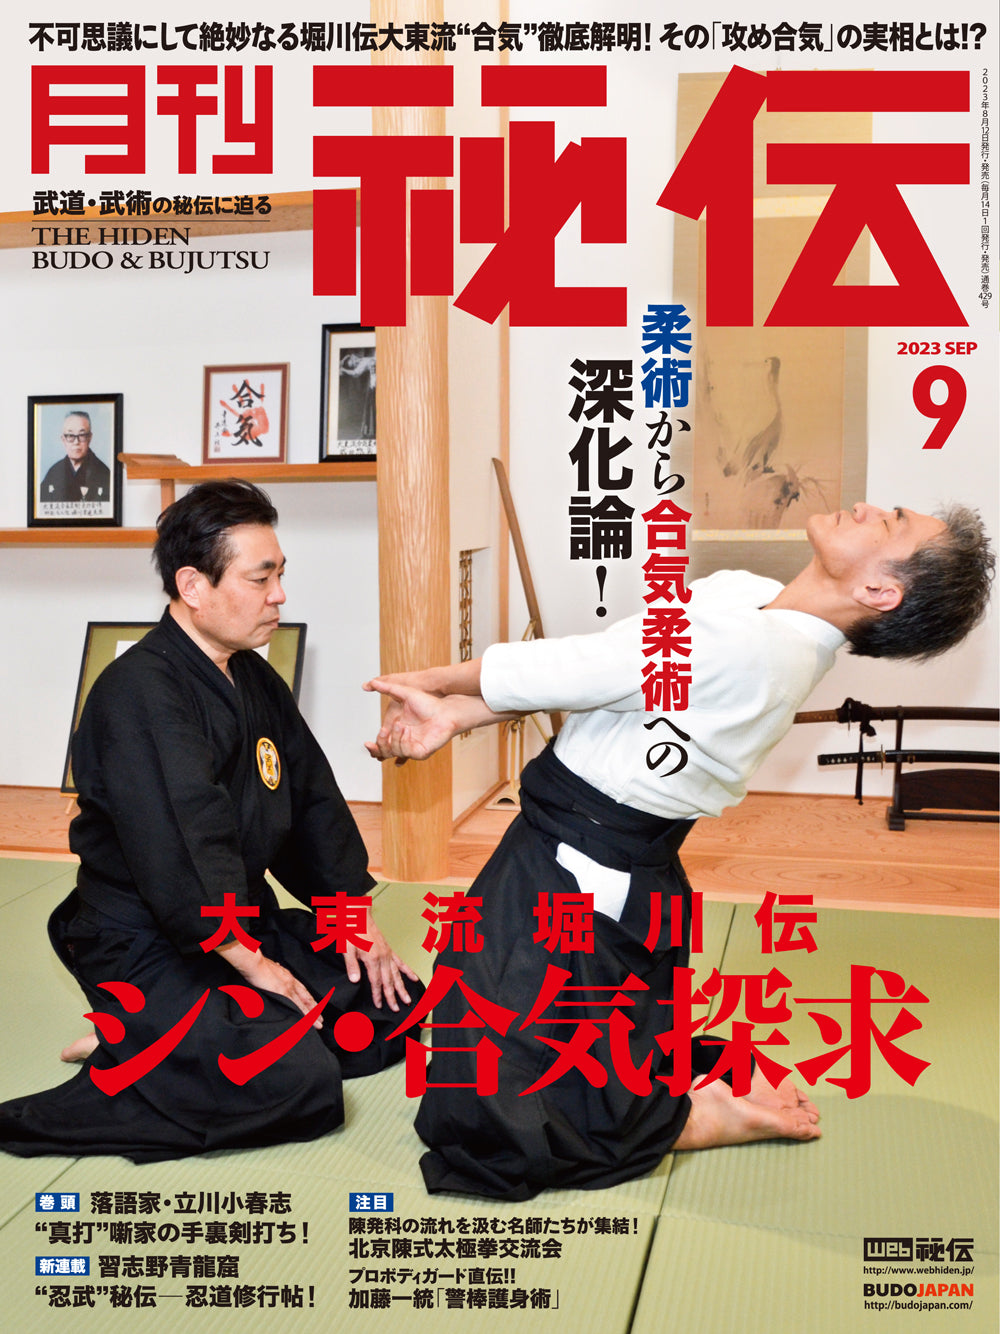 Hiden Budo & Bujutsu Magazine September 2023